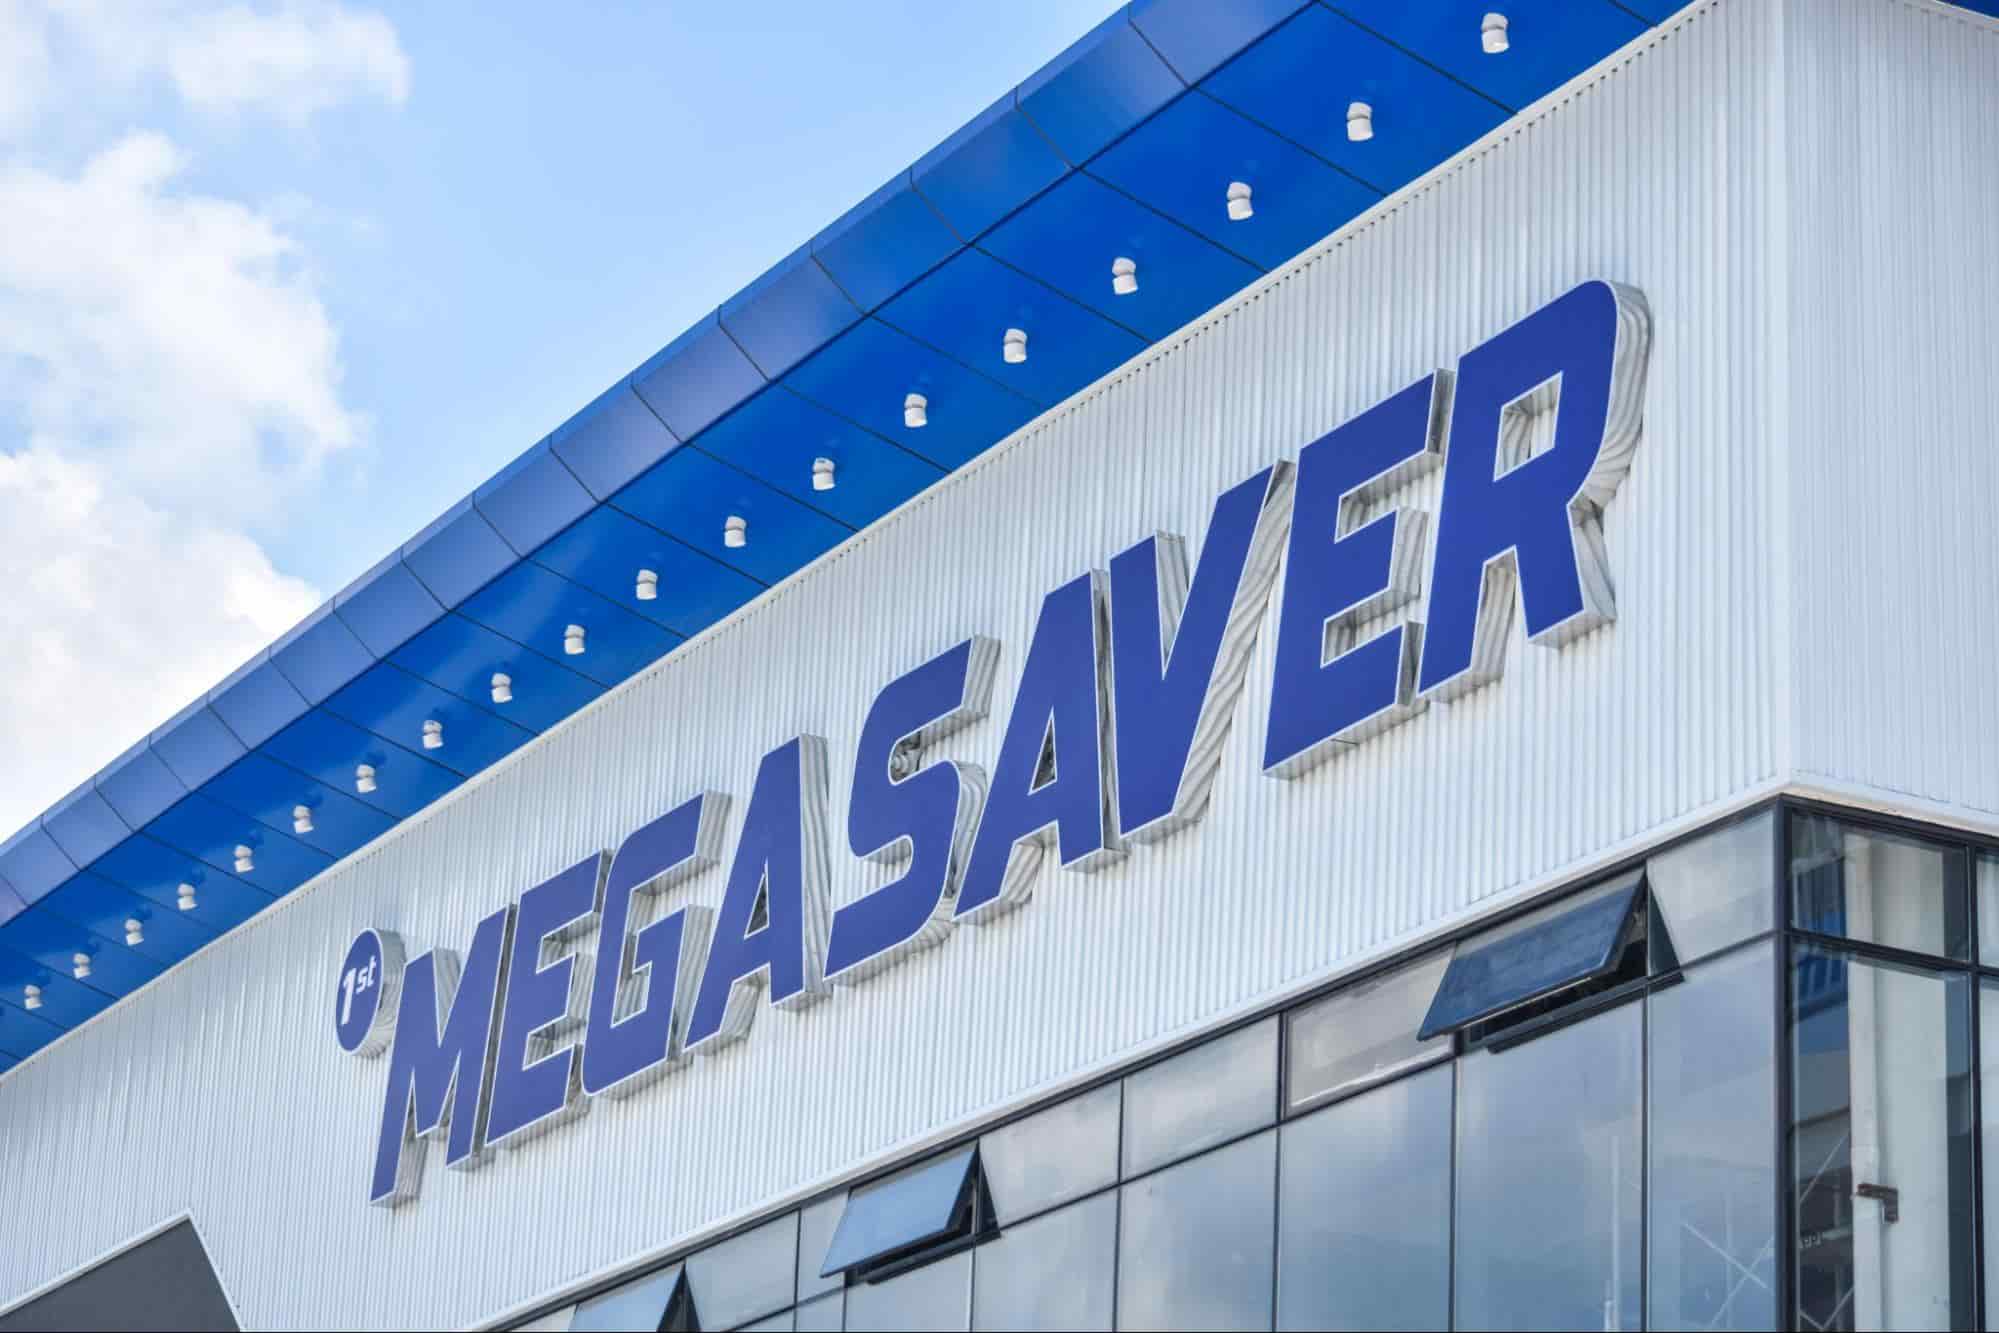 1st Megasaver's Commercial Triumph in Magalang, Pampanga